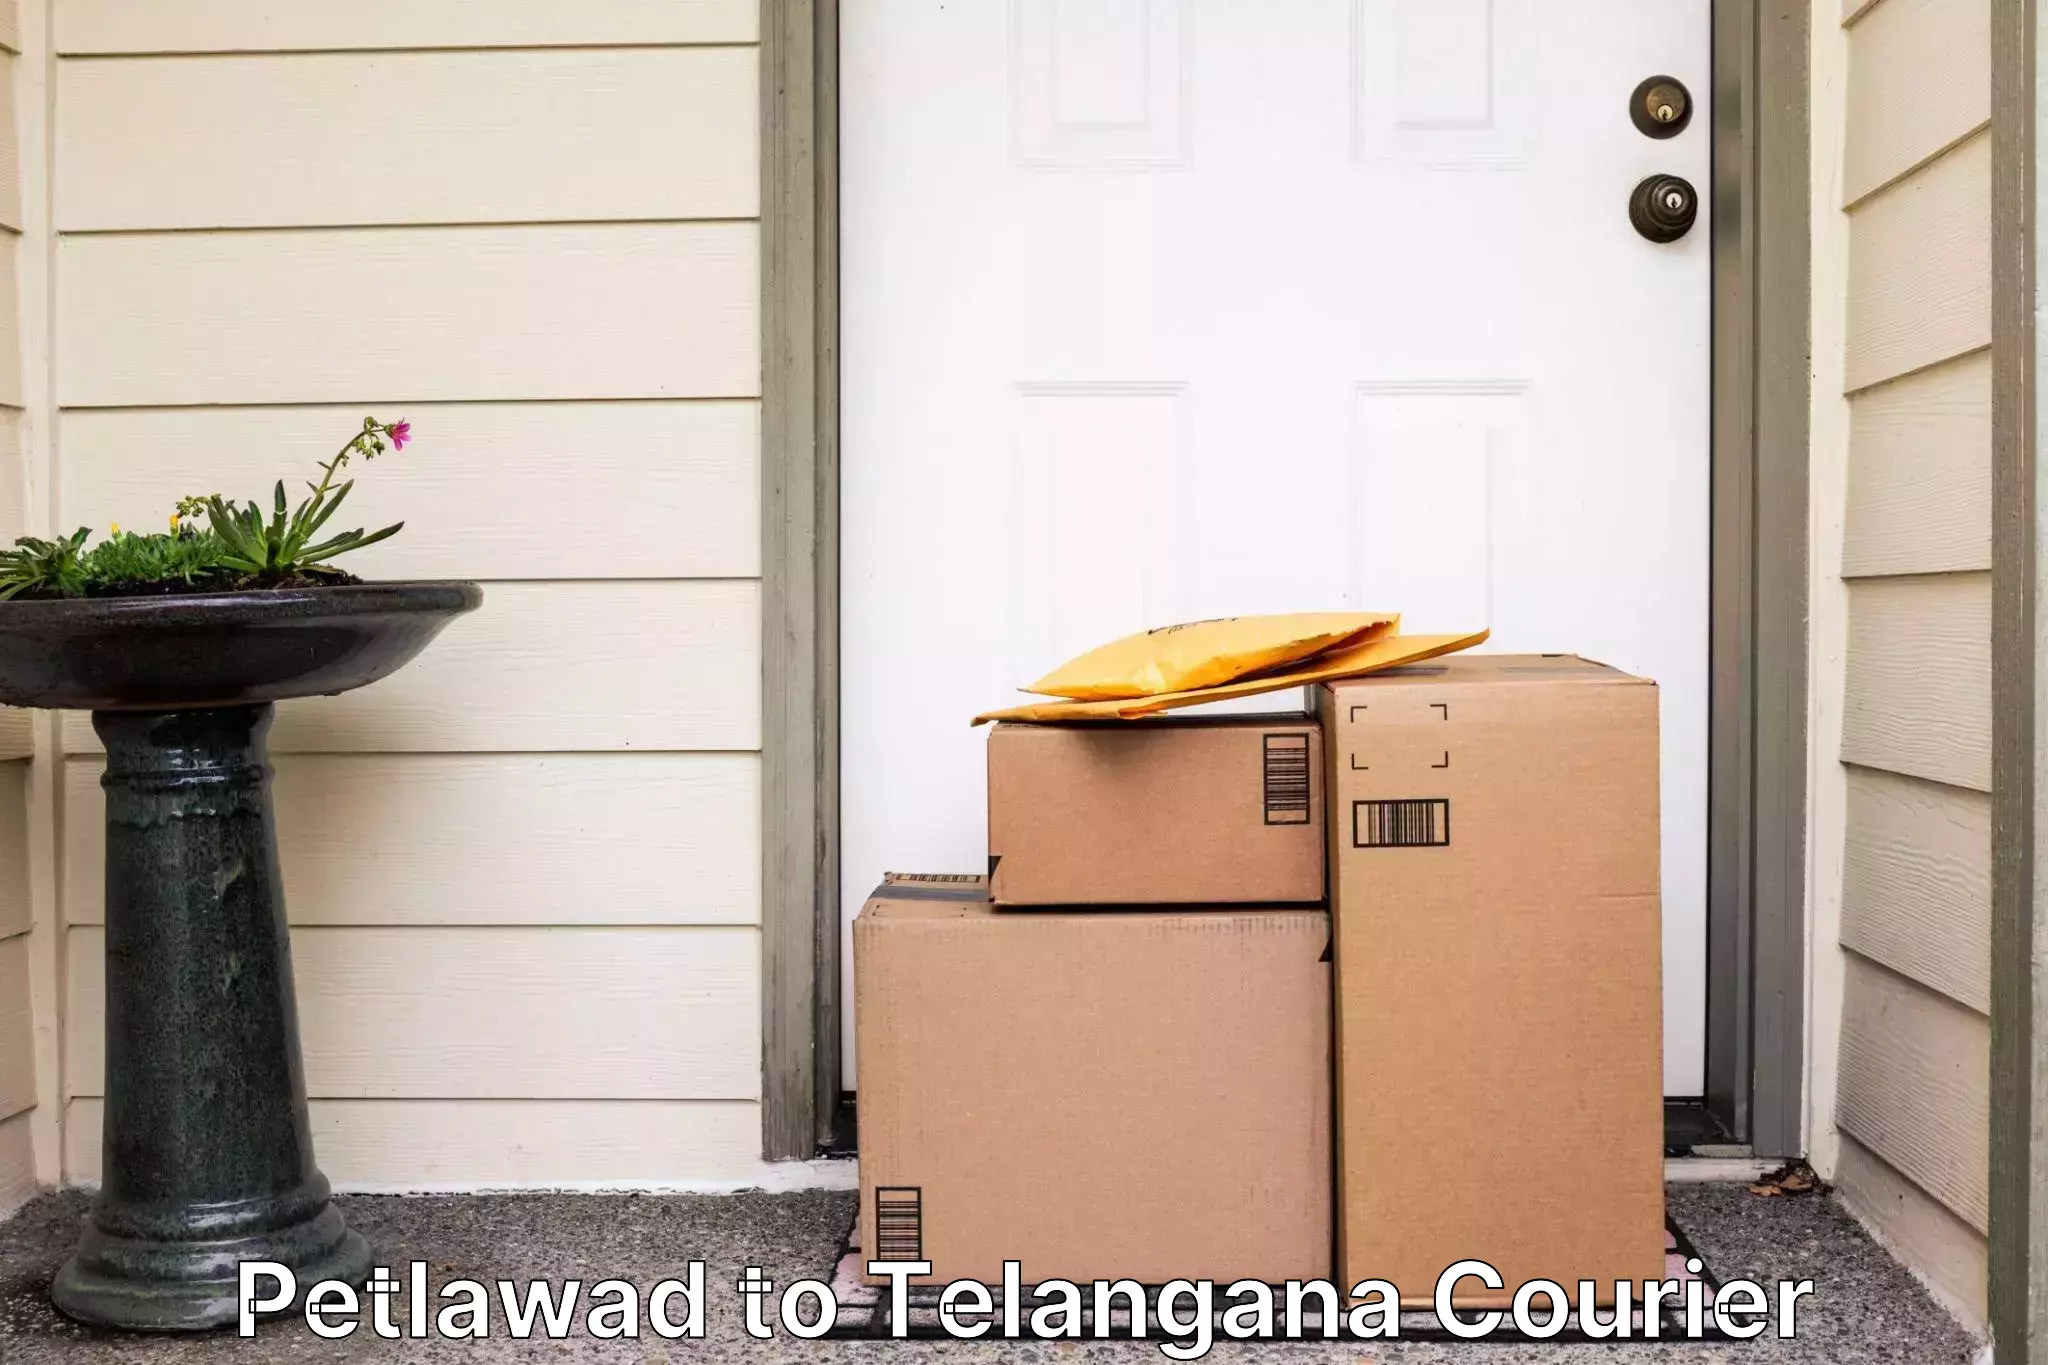 Logistics service provider Petlawad to Telangana